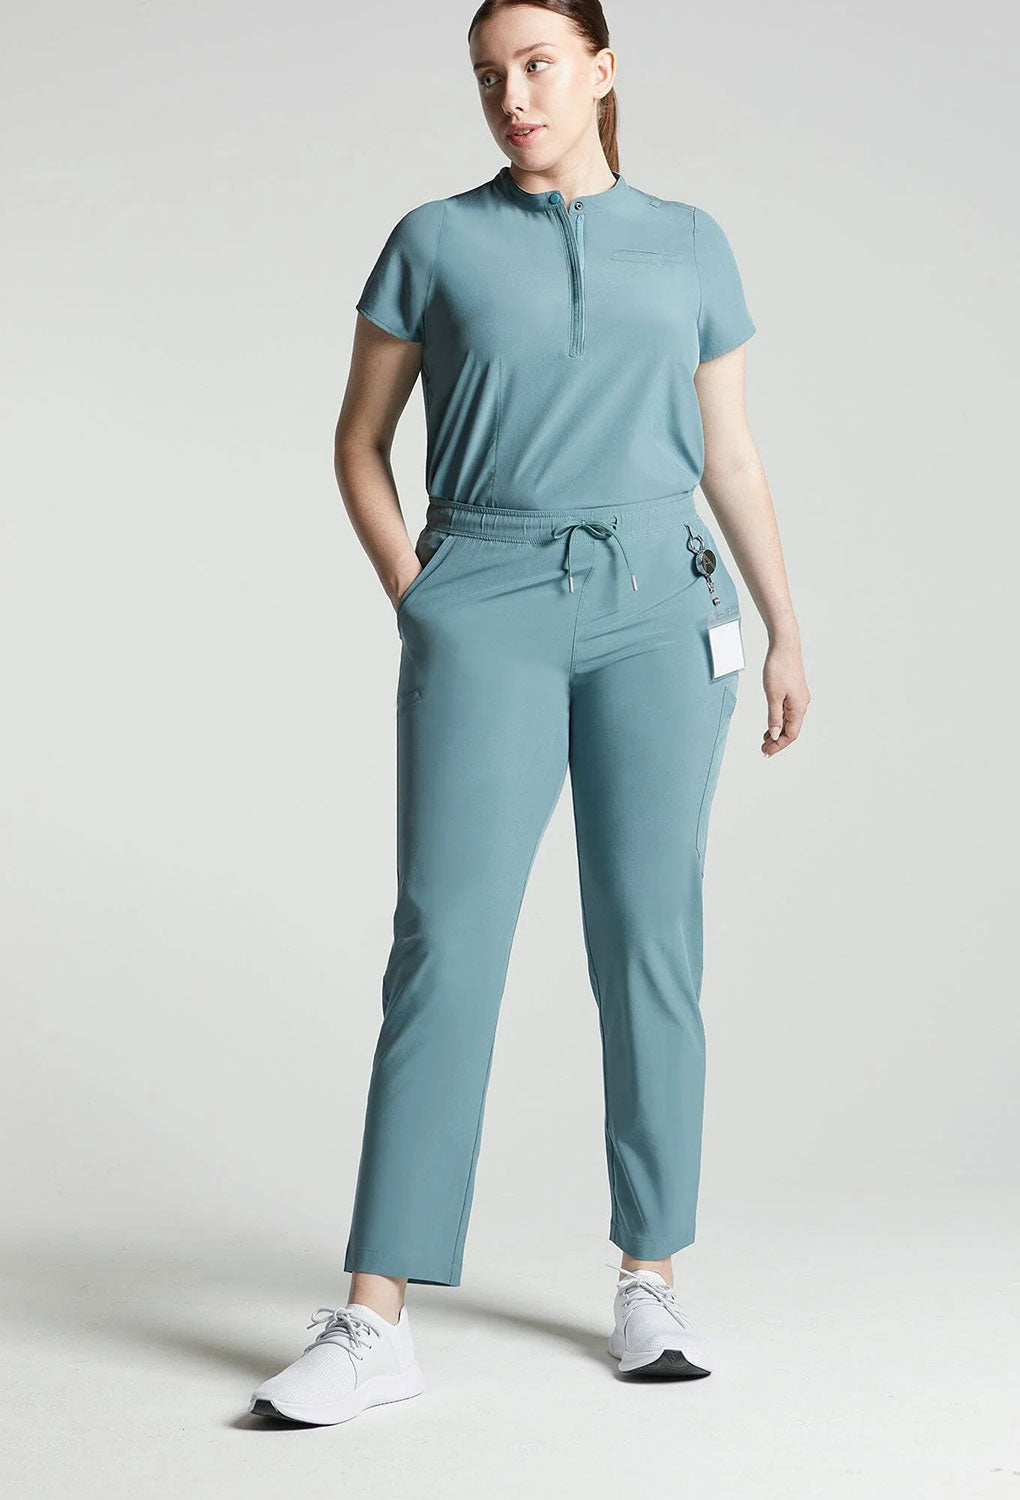 Women's Scrub Accessories – Noel Asmar Uniforms